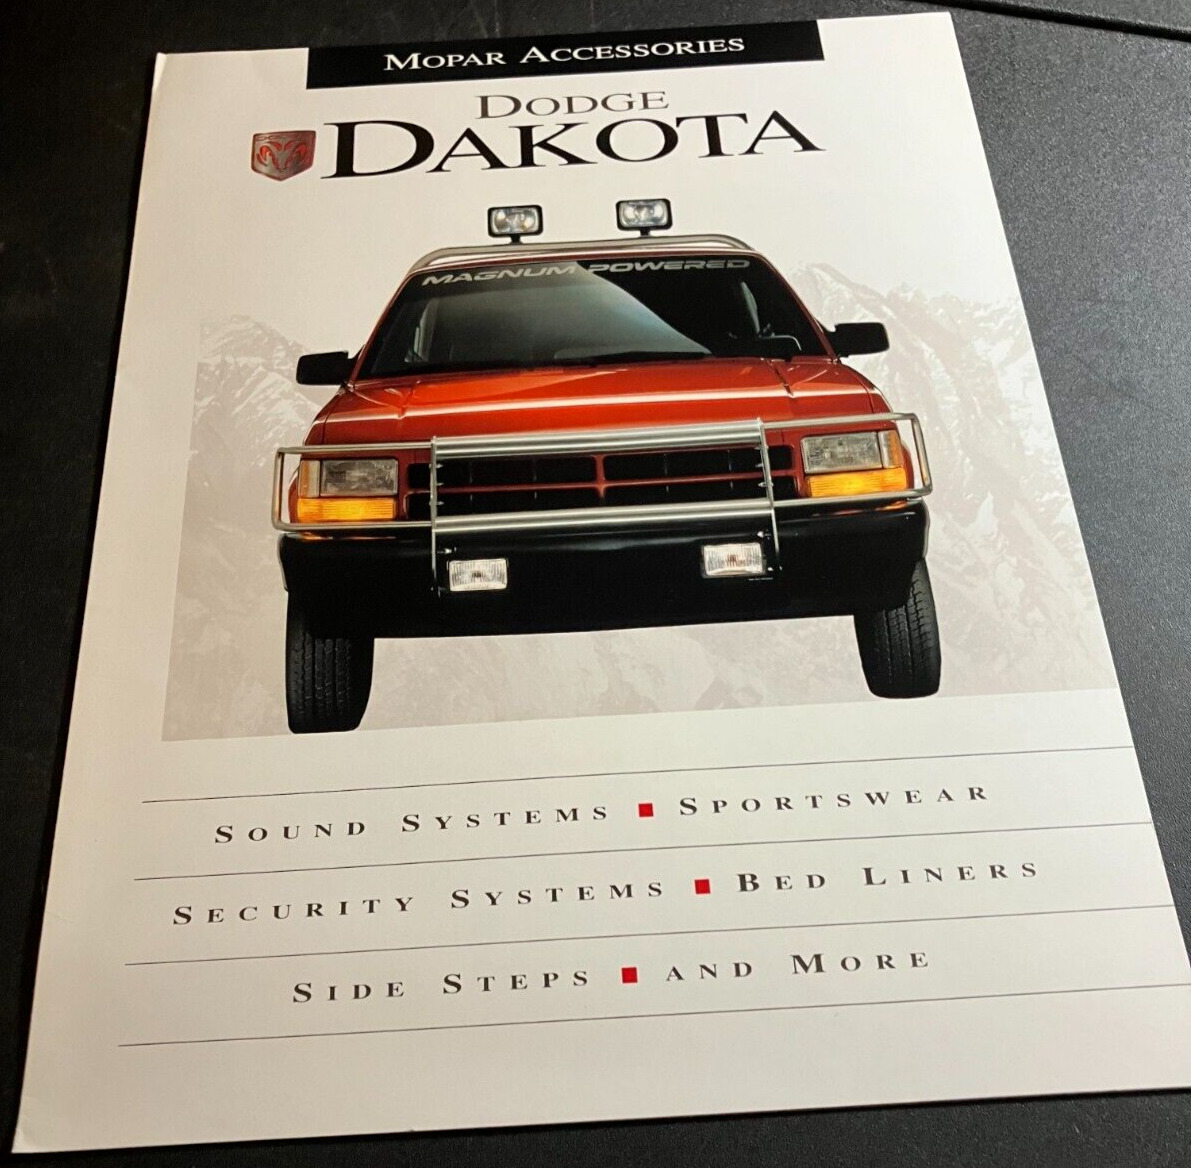 1994 Dodge Dakota Accessories by Mopar - Vintage 6-Page Dealer Sales Brochure